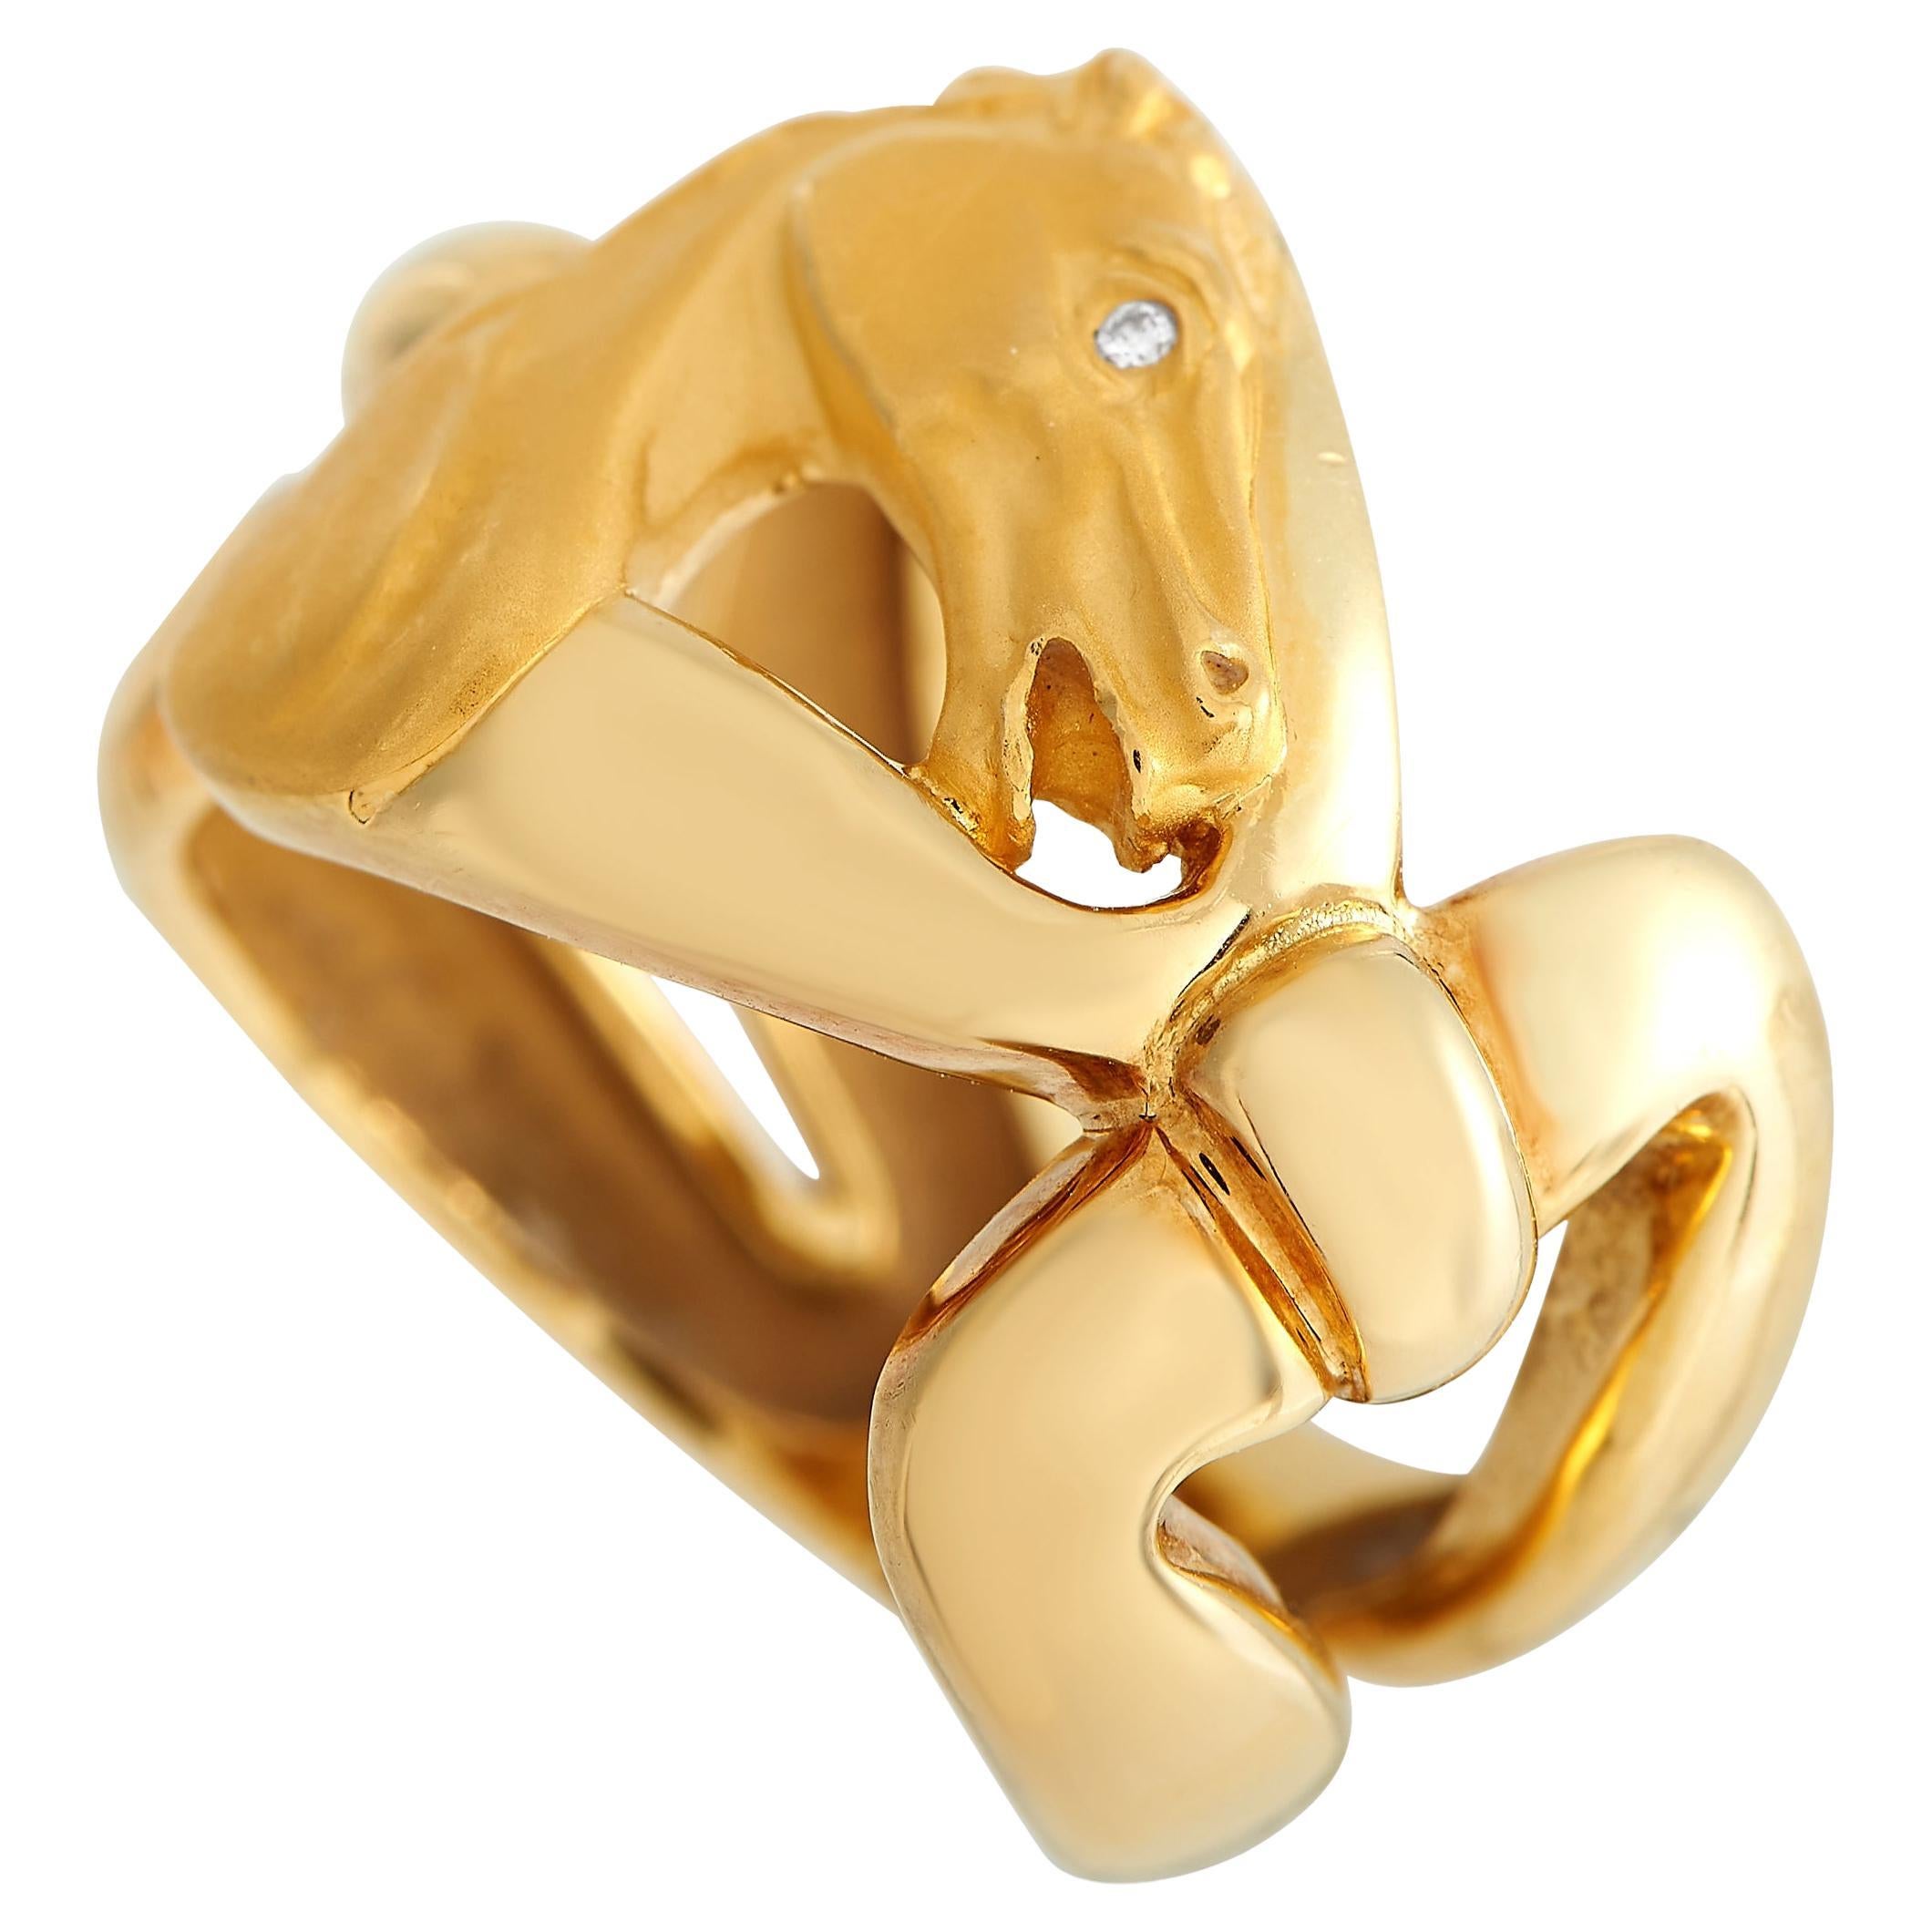 Carrera y Carrera, bague cheval oeil en or jaune 18 carats avec diamants